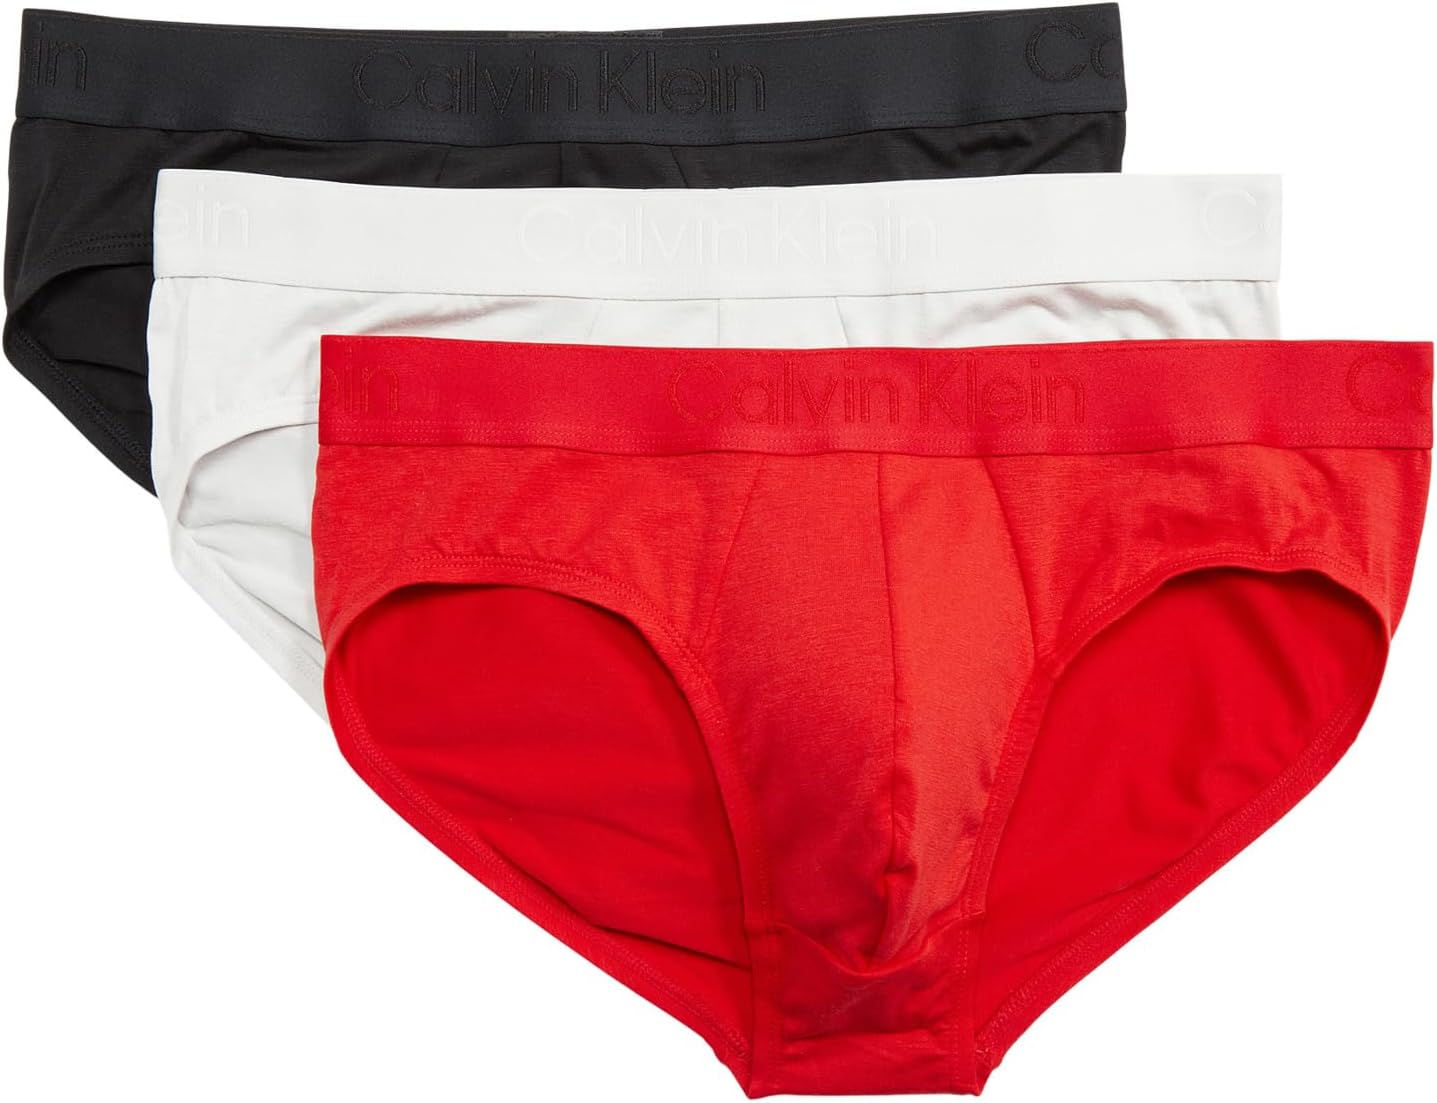 Черные трусы CK, комплект из 3 шт. Calvin Klein Underwear, цвет Rouge/Lunar Rock/Black